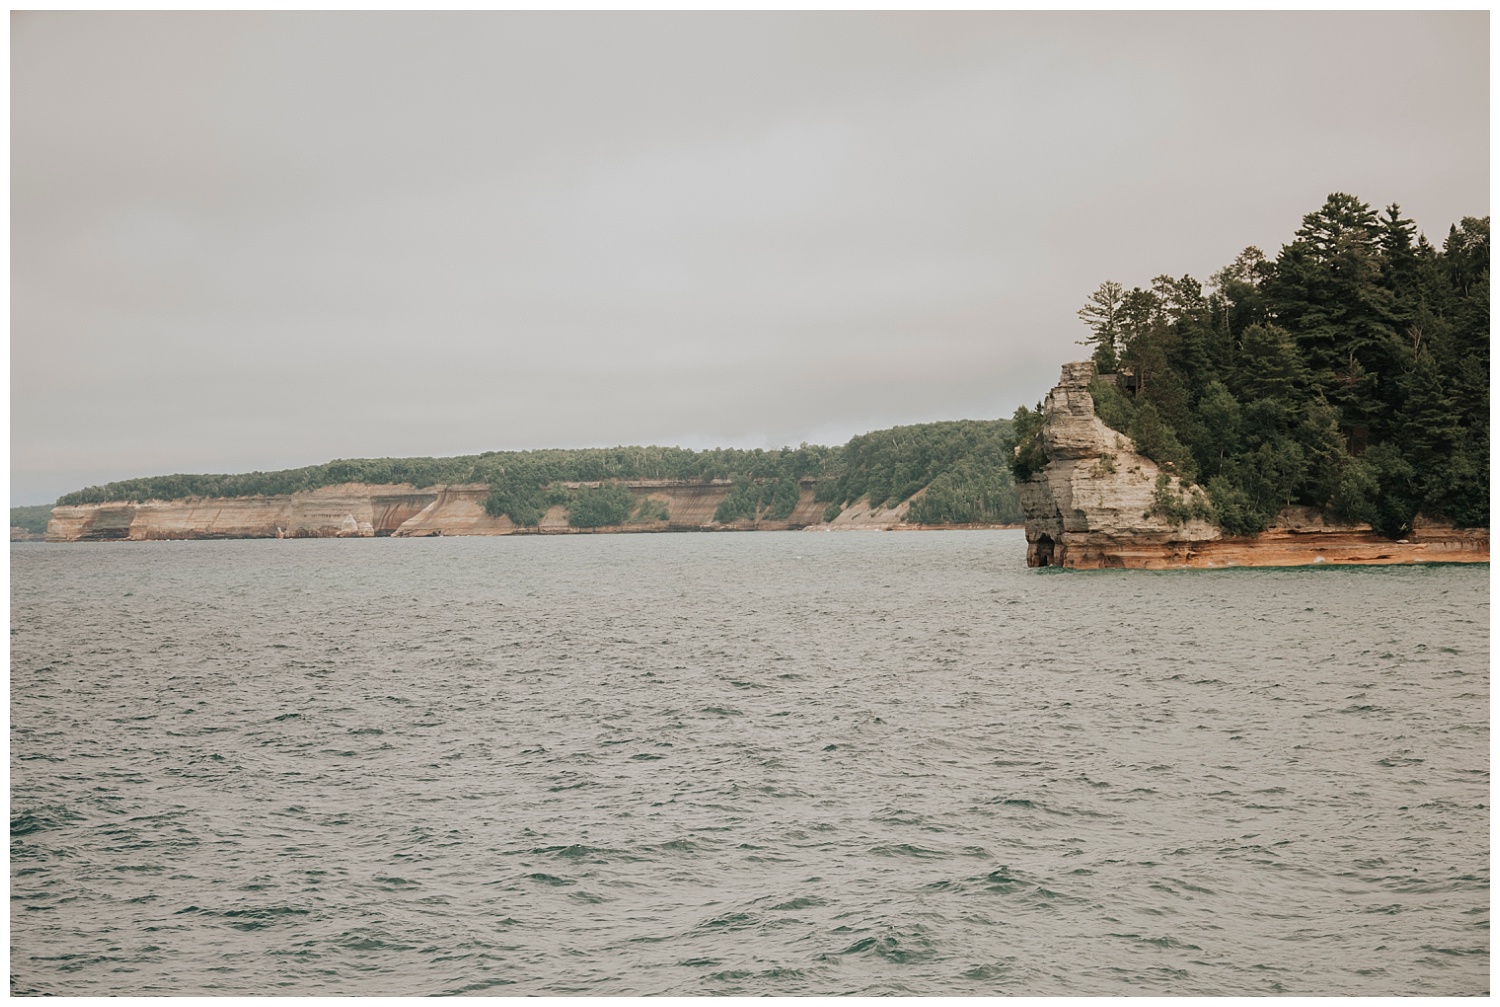  Boating near Munising, Michigan| Pictured Rocks National Lakeshore| Elopement Inspiration| Wild Onyx Photography 